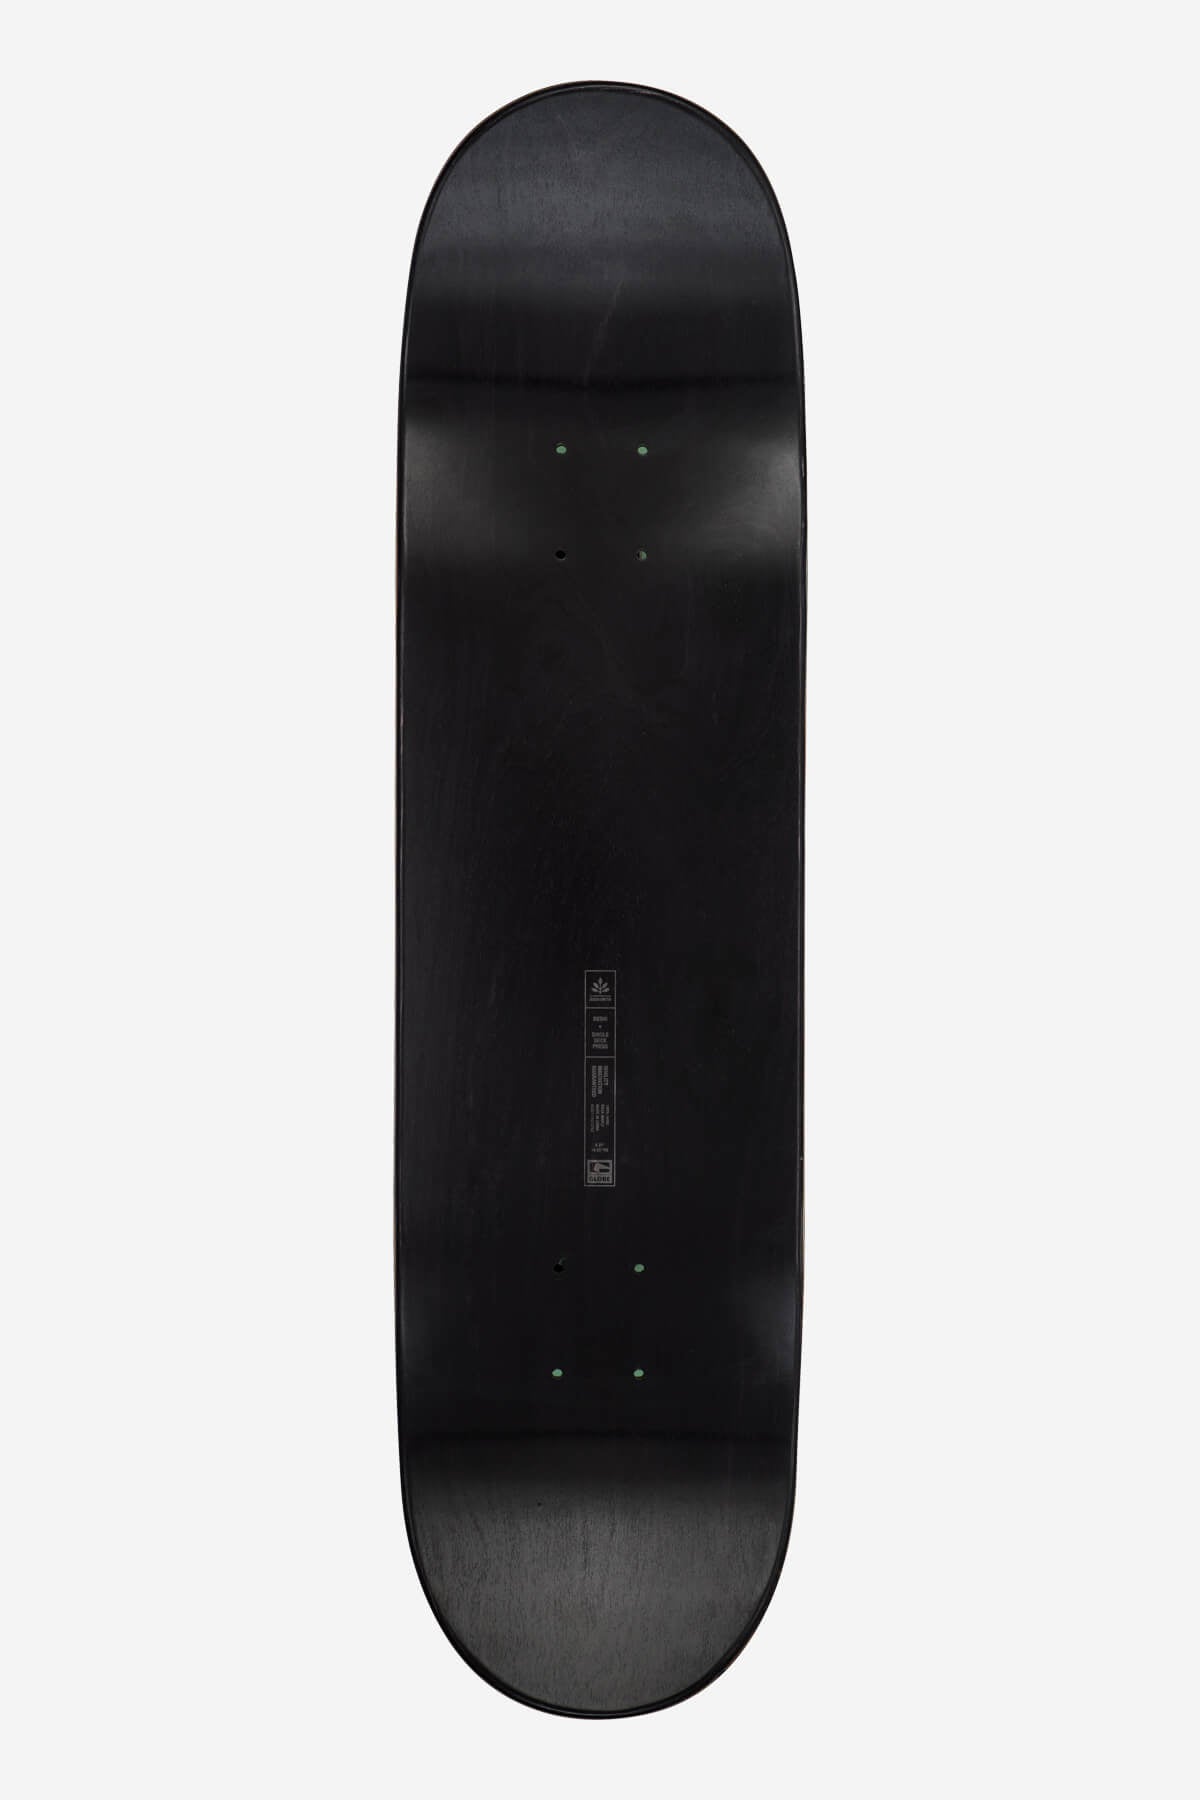 Globe - G1 Lineform 2 - Minze - 8,25" Skateboard Deck